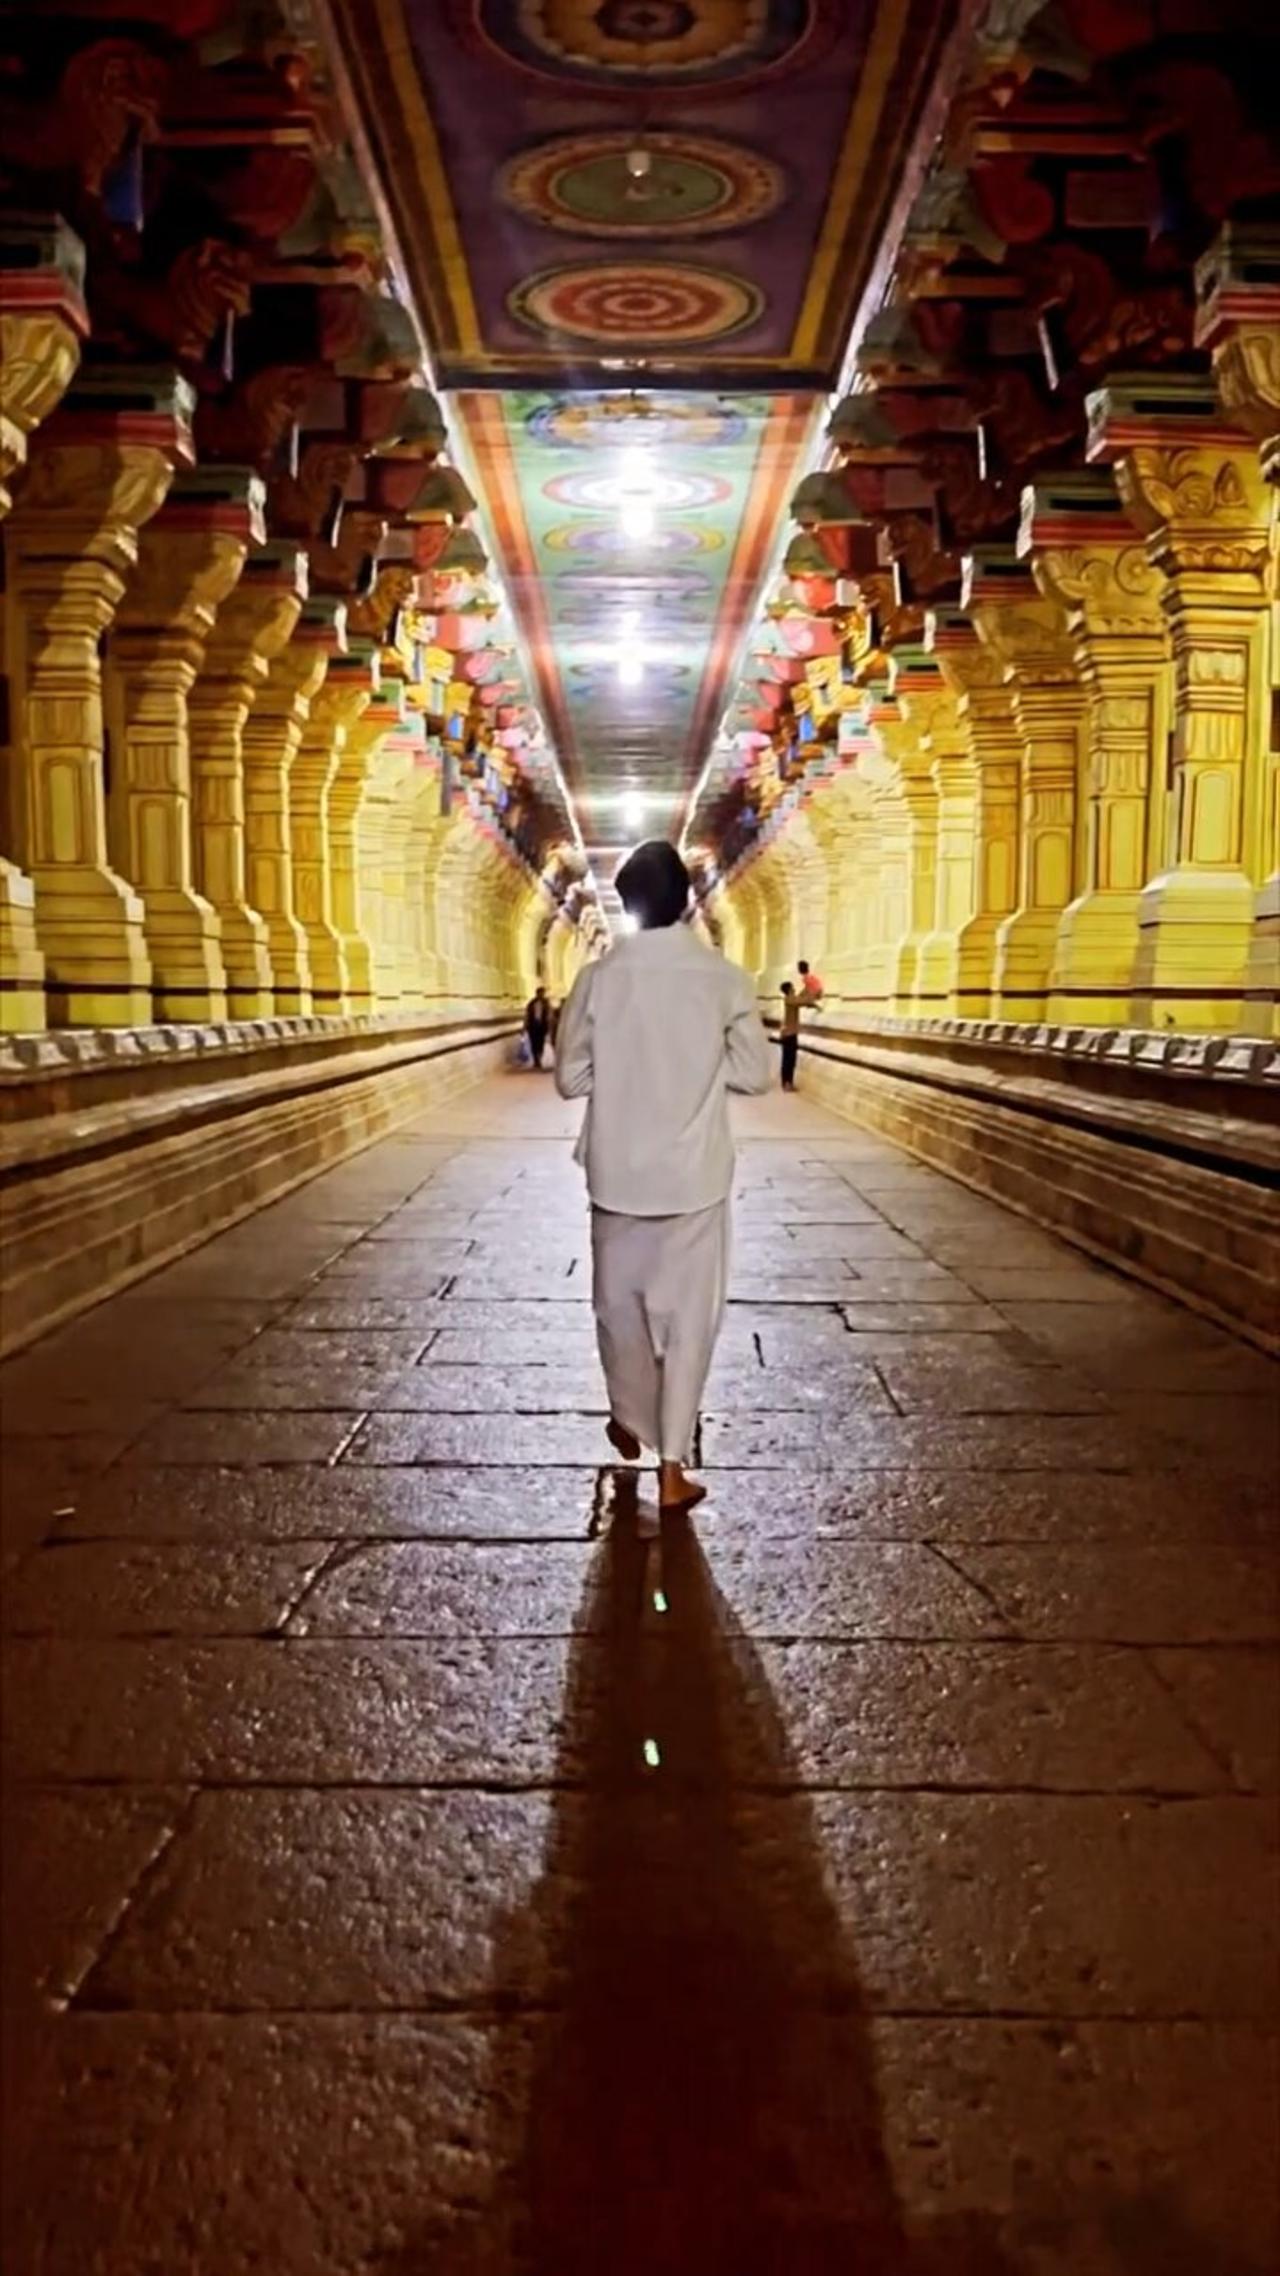 Explore the pillars and corridors in Ramanathaswamy Temple